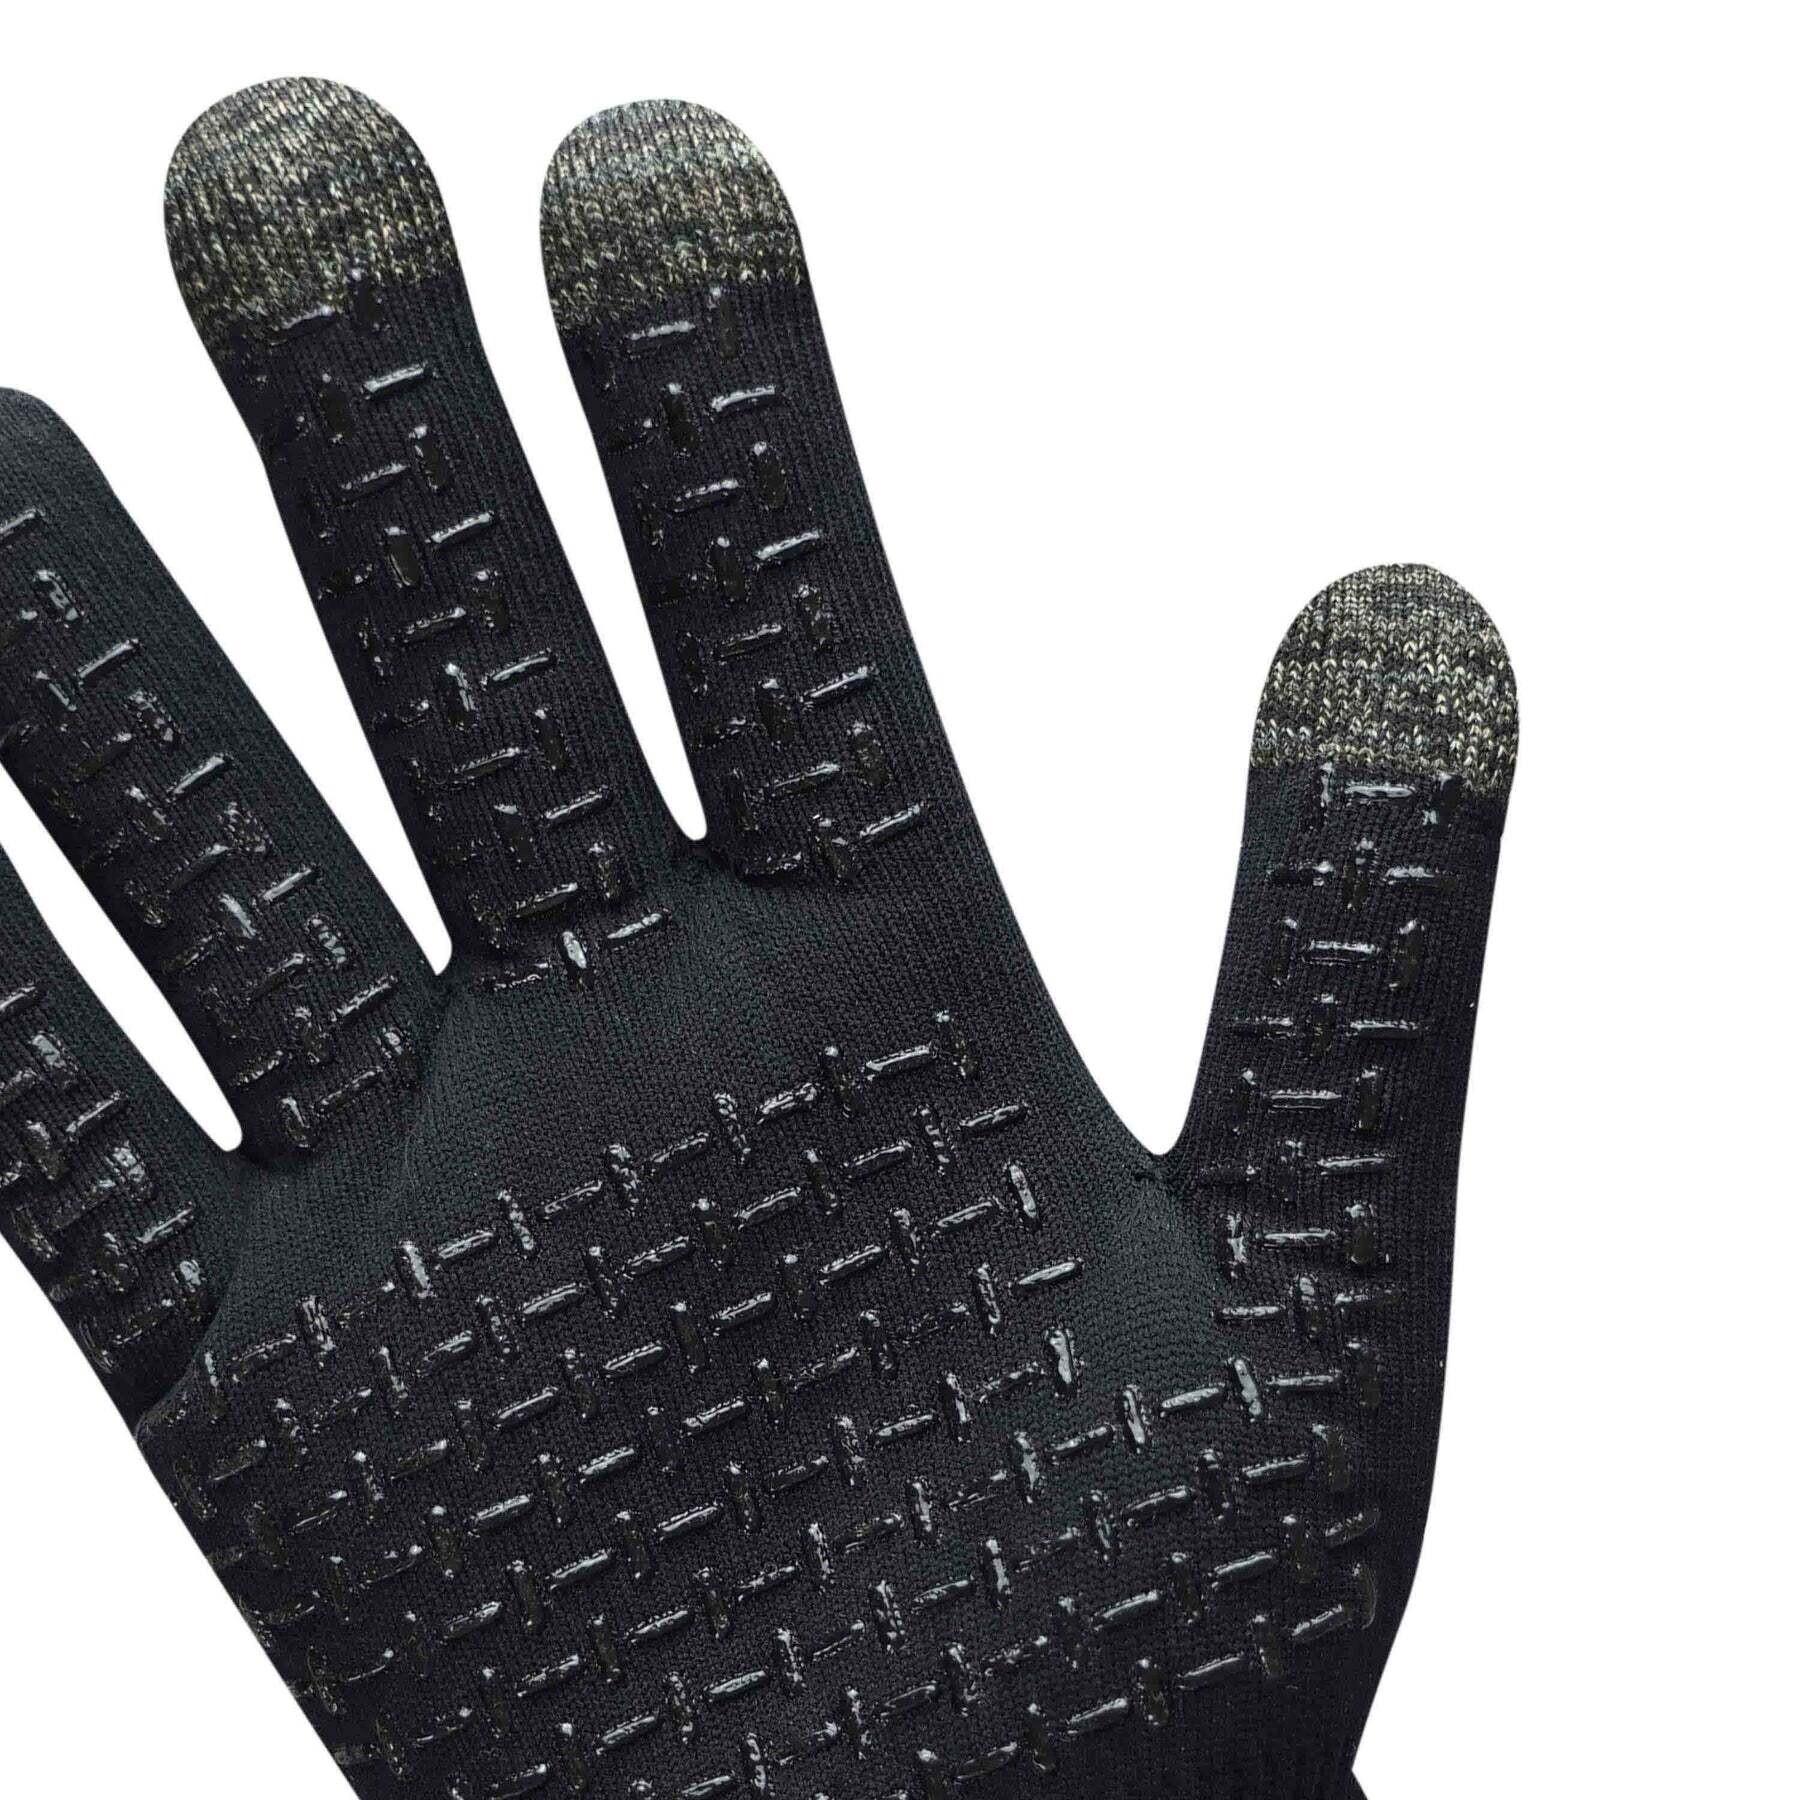 RaidLight Touch Mp+® gloves